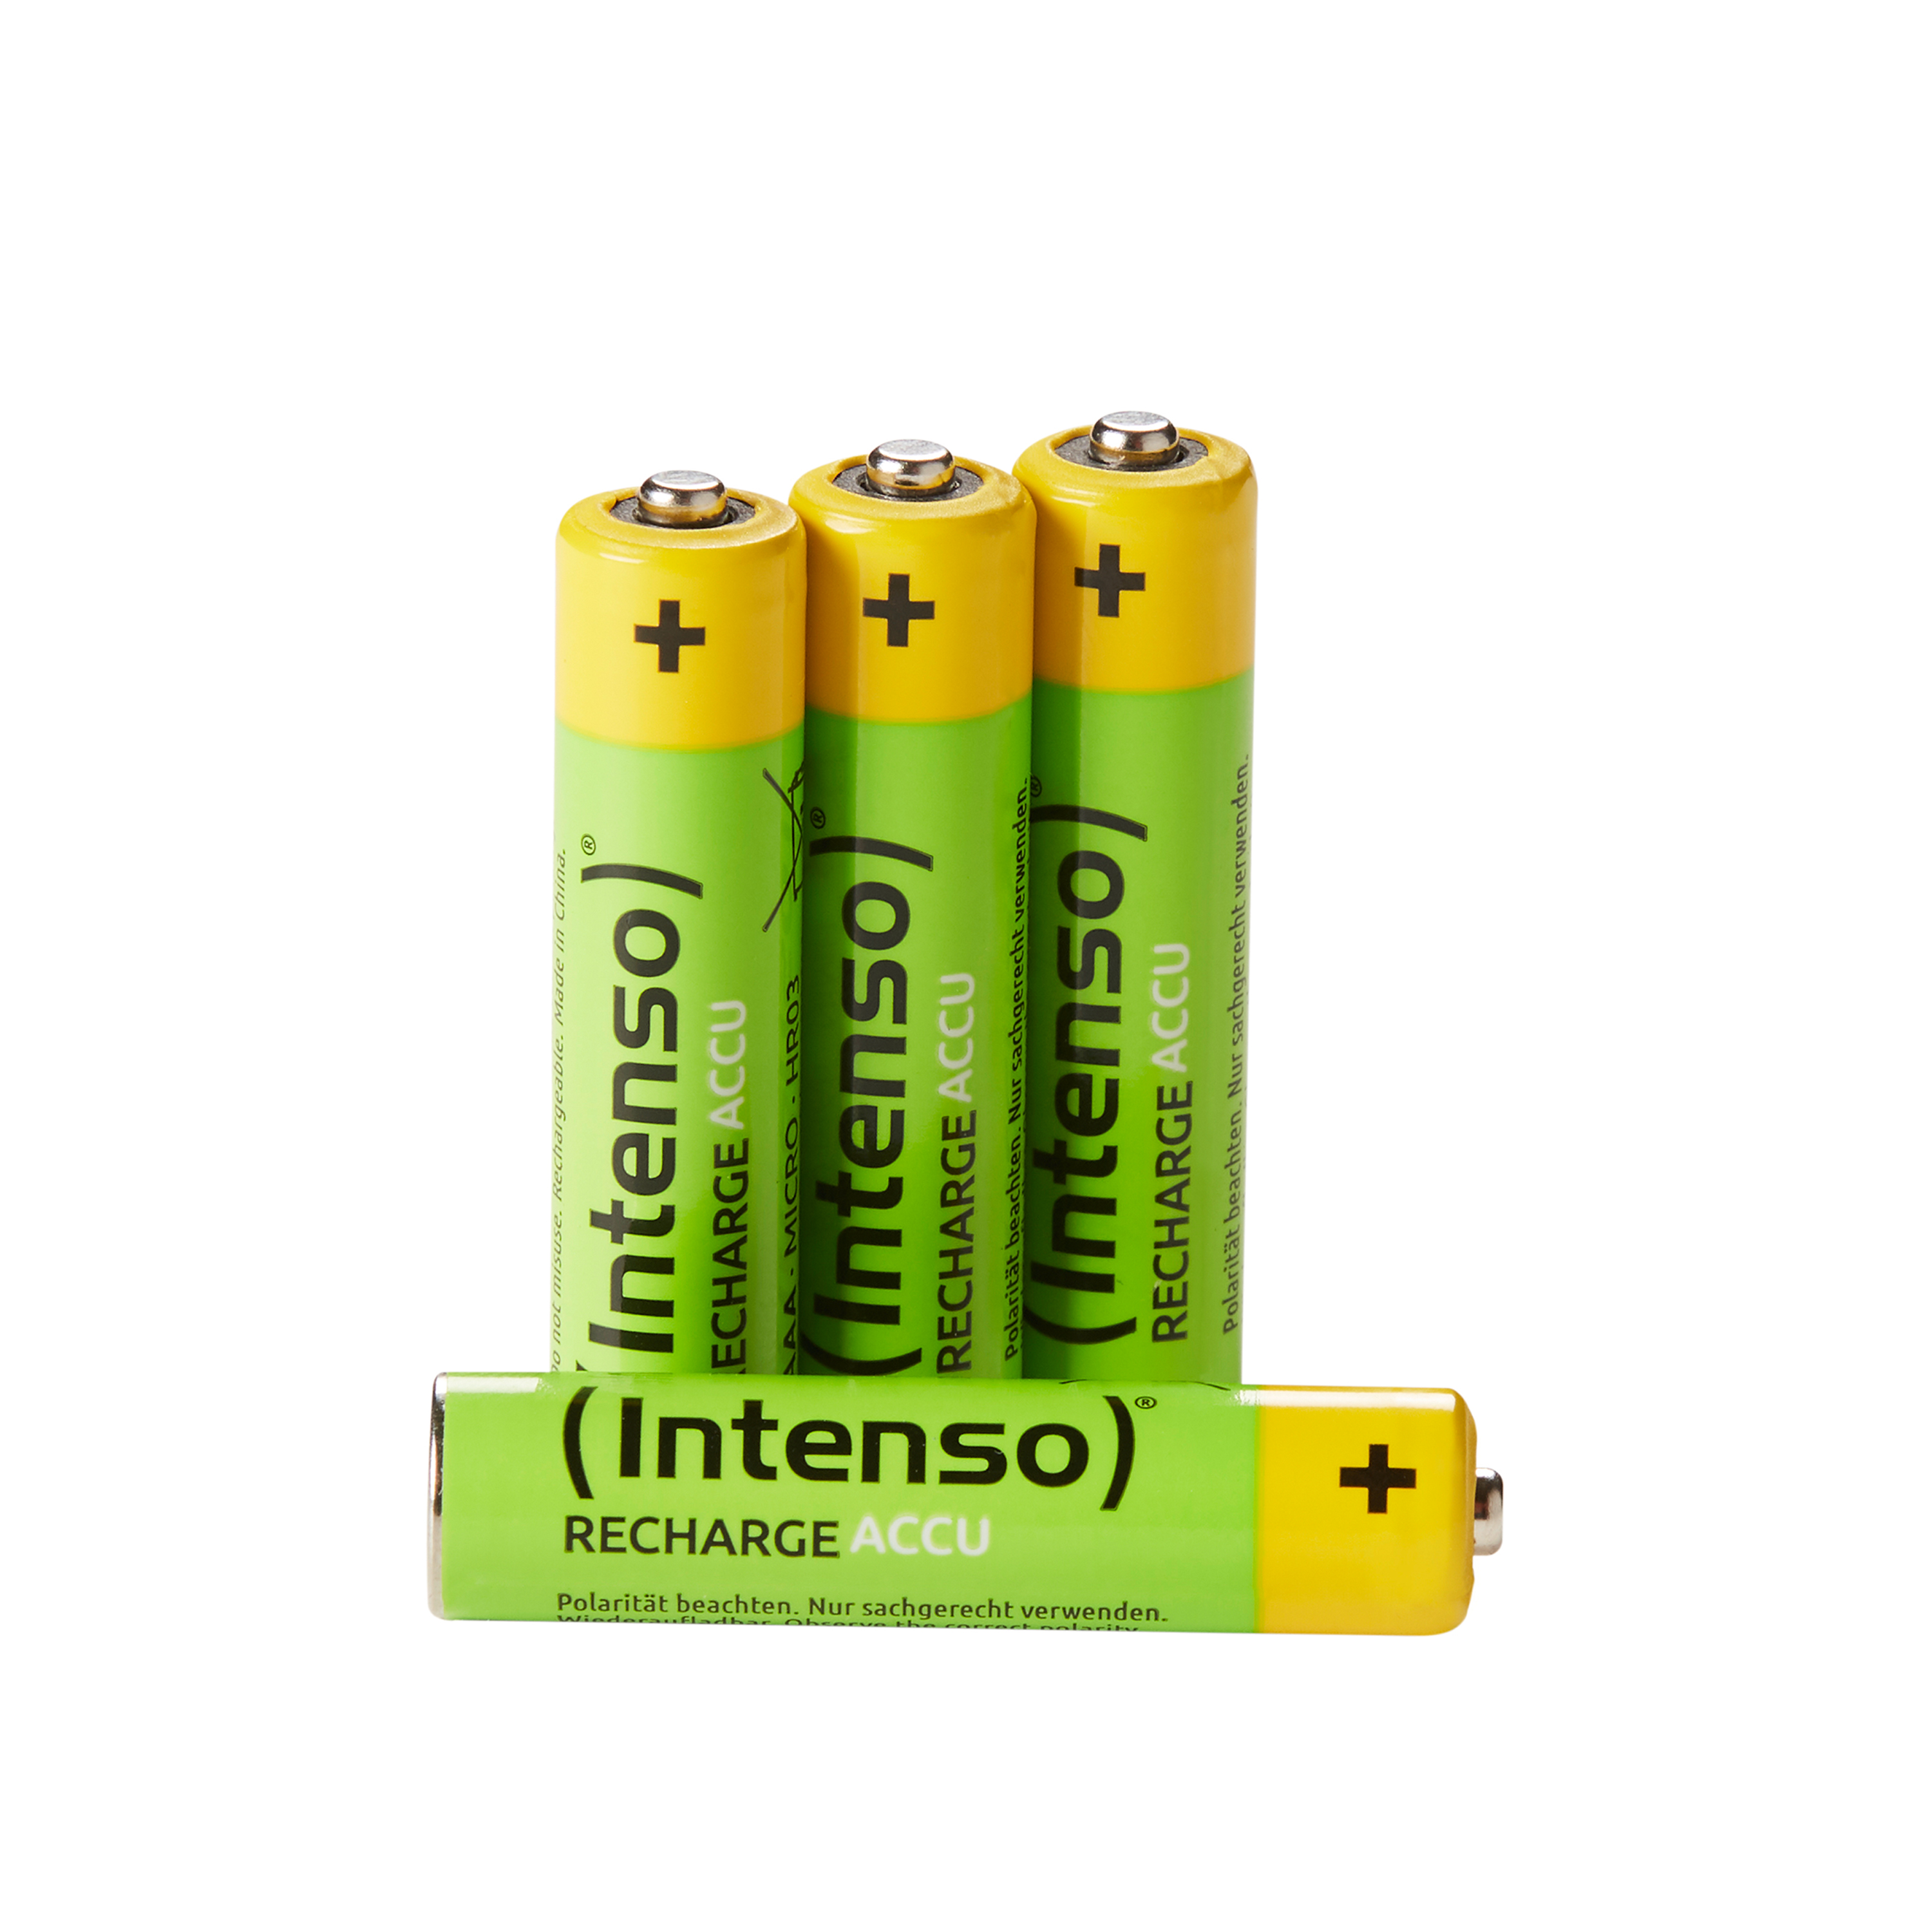 INTENSO Energy Eco Accu 850 (Nickel-Metallhydrid) AAA HR03 Batterie, Wiederaufladbare HR03, 4er 850 NiMH mAh AAA, Batterie mAh Pack Mignon